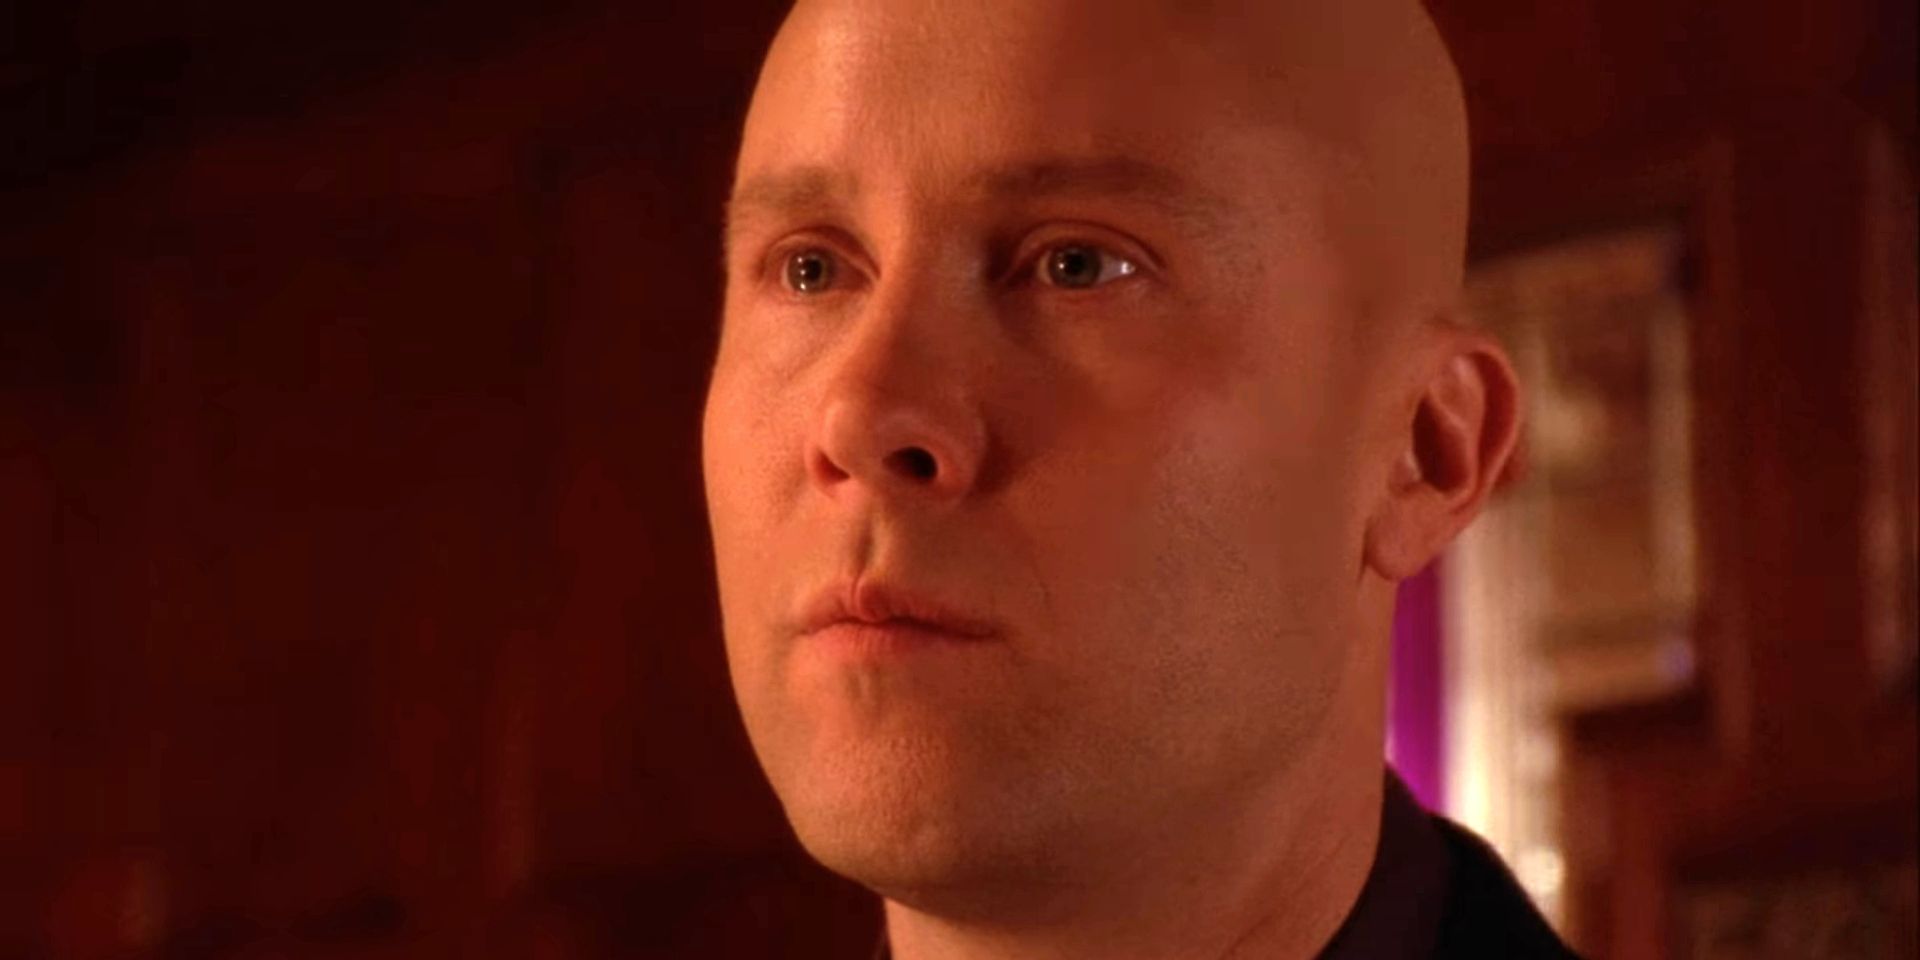 Smallville Season 2 Pieceworks Card PW8 Michael Rosenbaum as Lex Luthor 